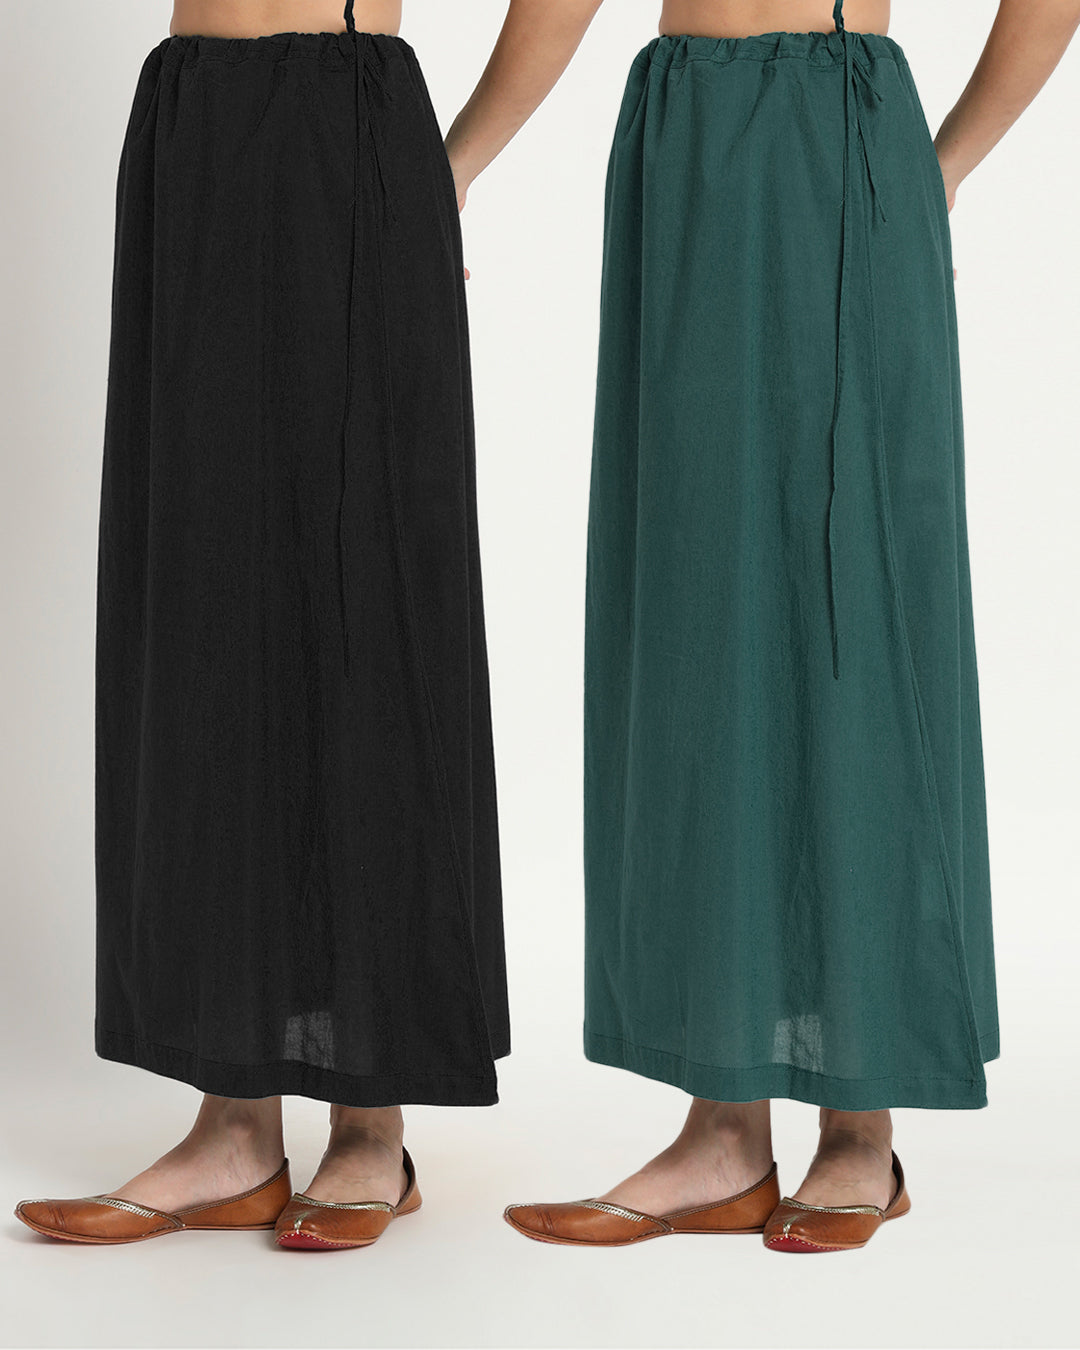 Combo: Black & Forest Green Peekaboo Petticoat- Set of 2